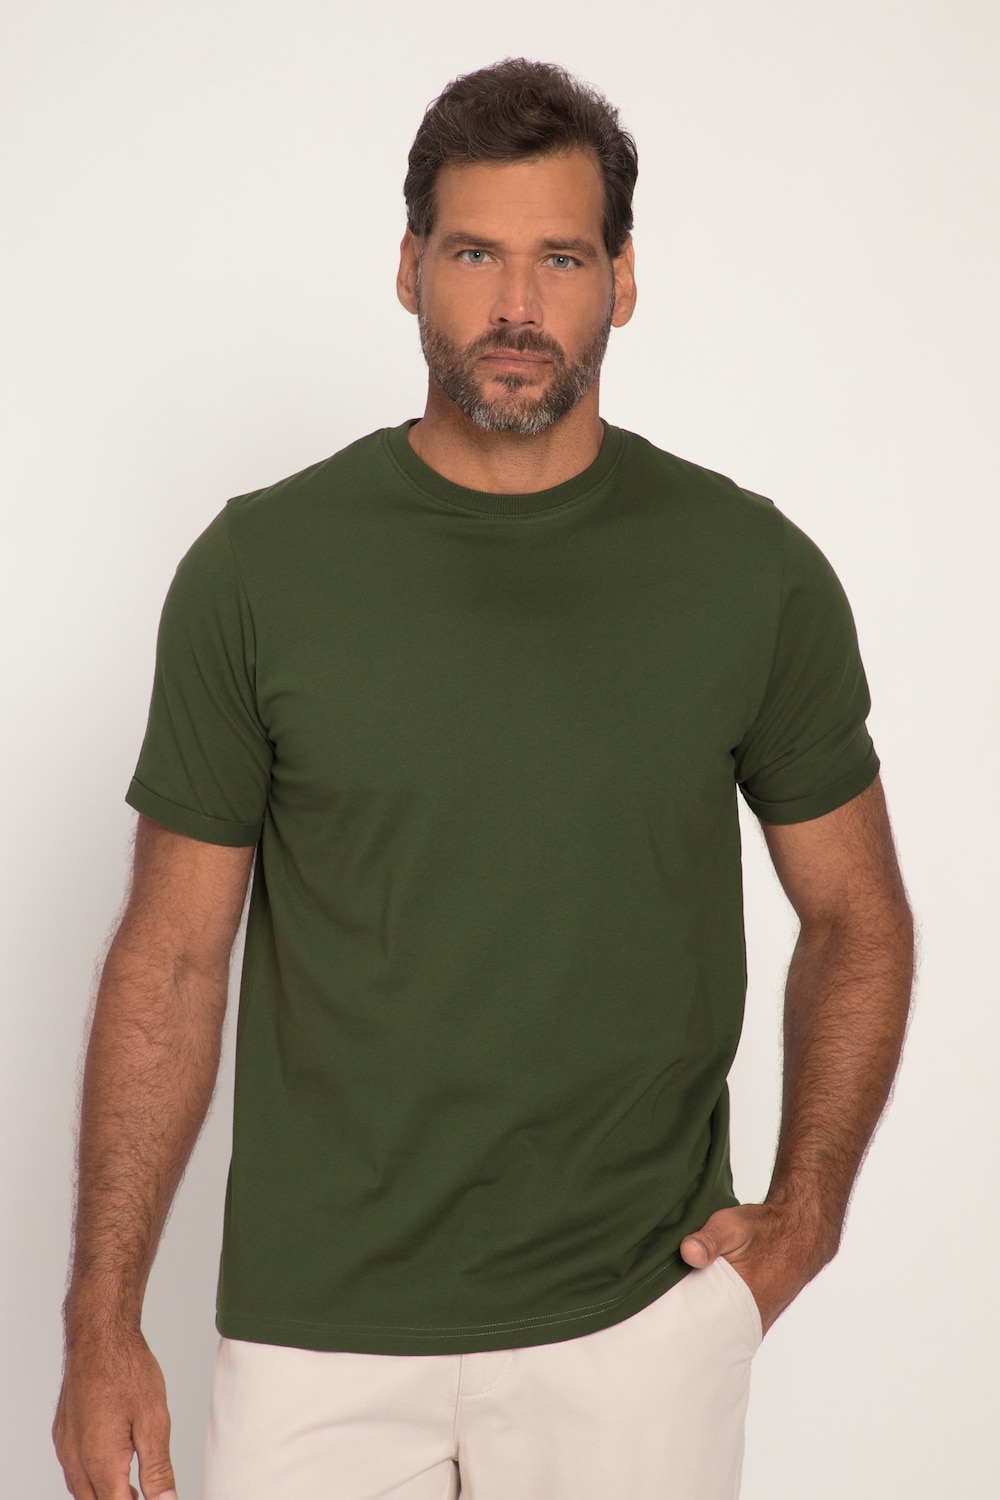 Grote Maten T-shirt, Heren, groen, Maat: 7XL, Katoen/Polyester, JP1880